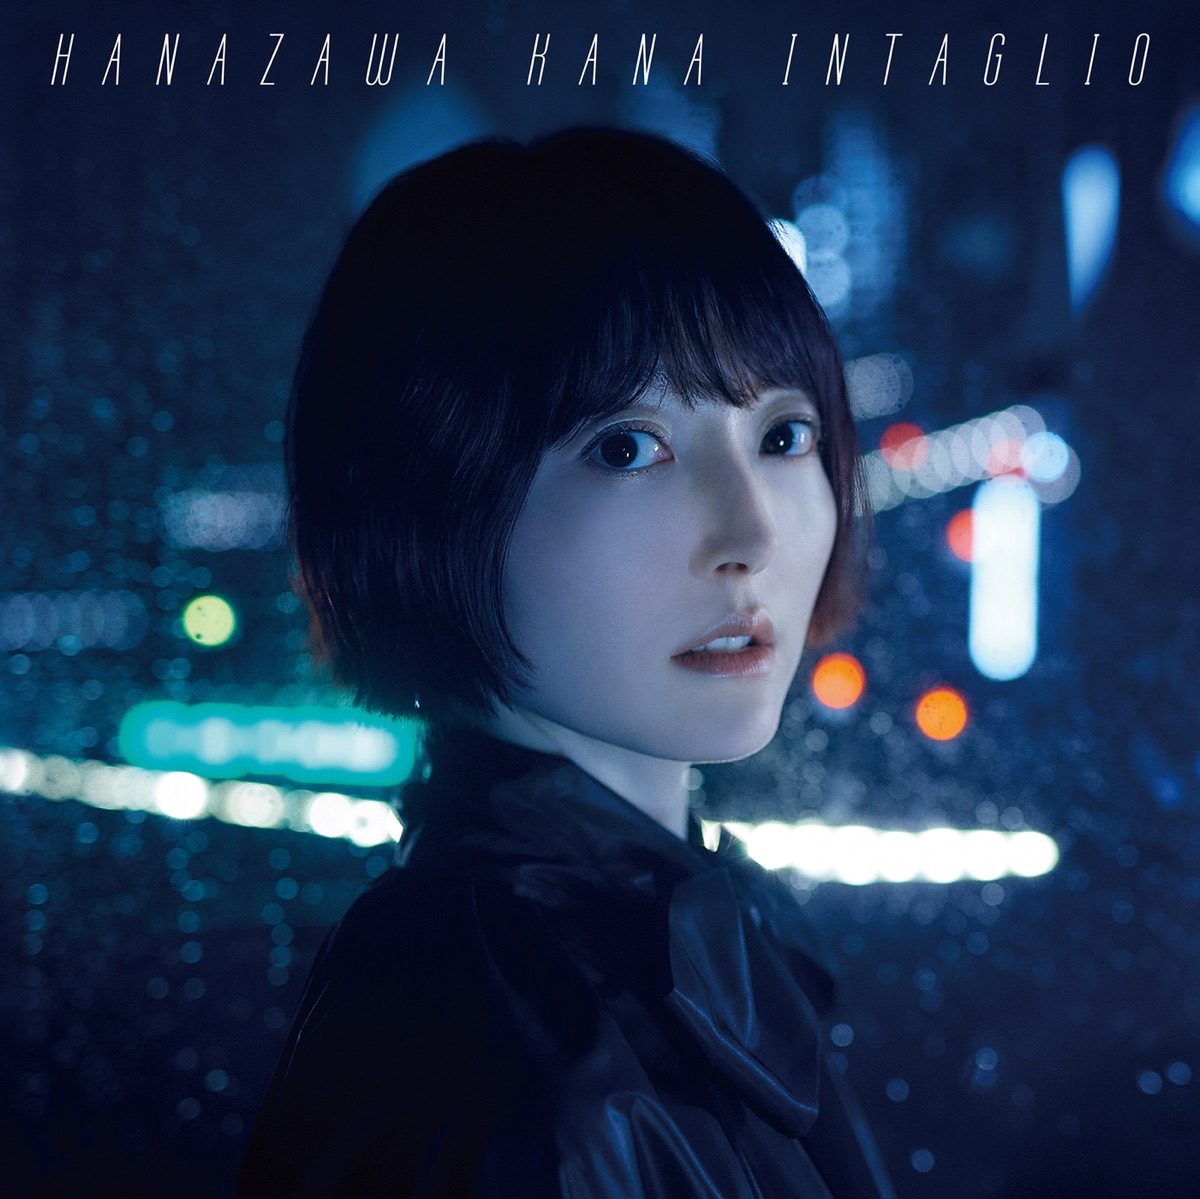 Cover art for『Kana Hanazawa - Intaglio』from the release『Intaglio』